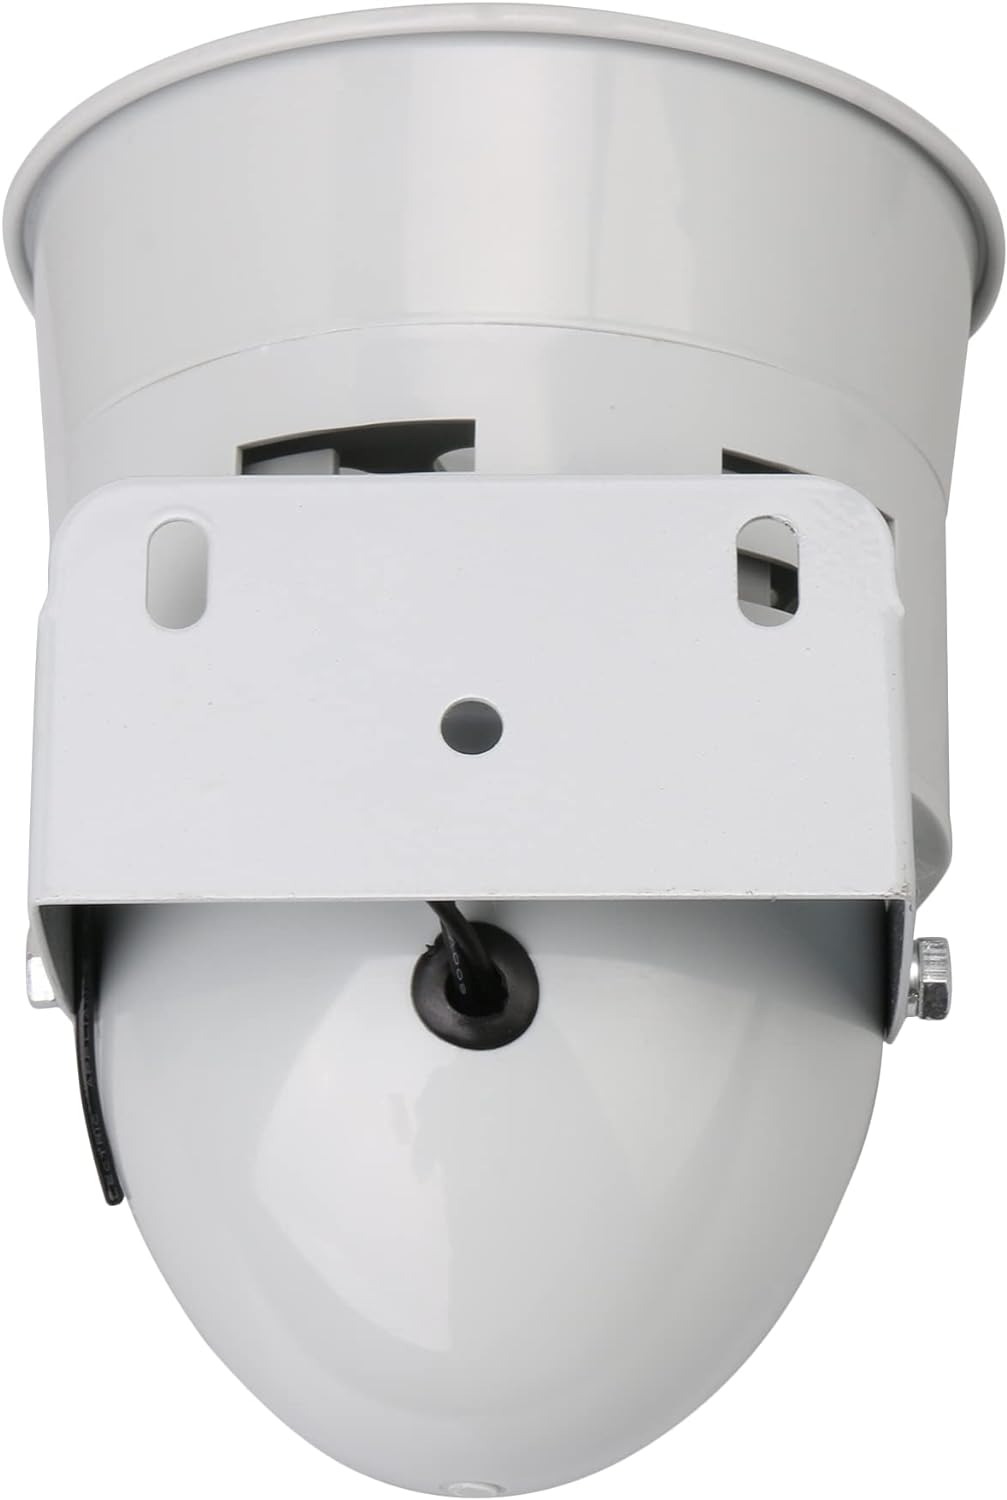 blhlltd Mxfans AC110V MS-290 Plastic Mini Motor Siren Sound Alarm Industrial Accessory